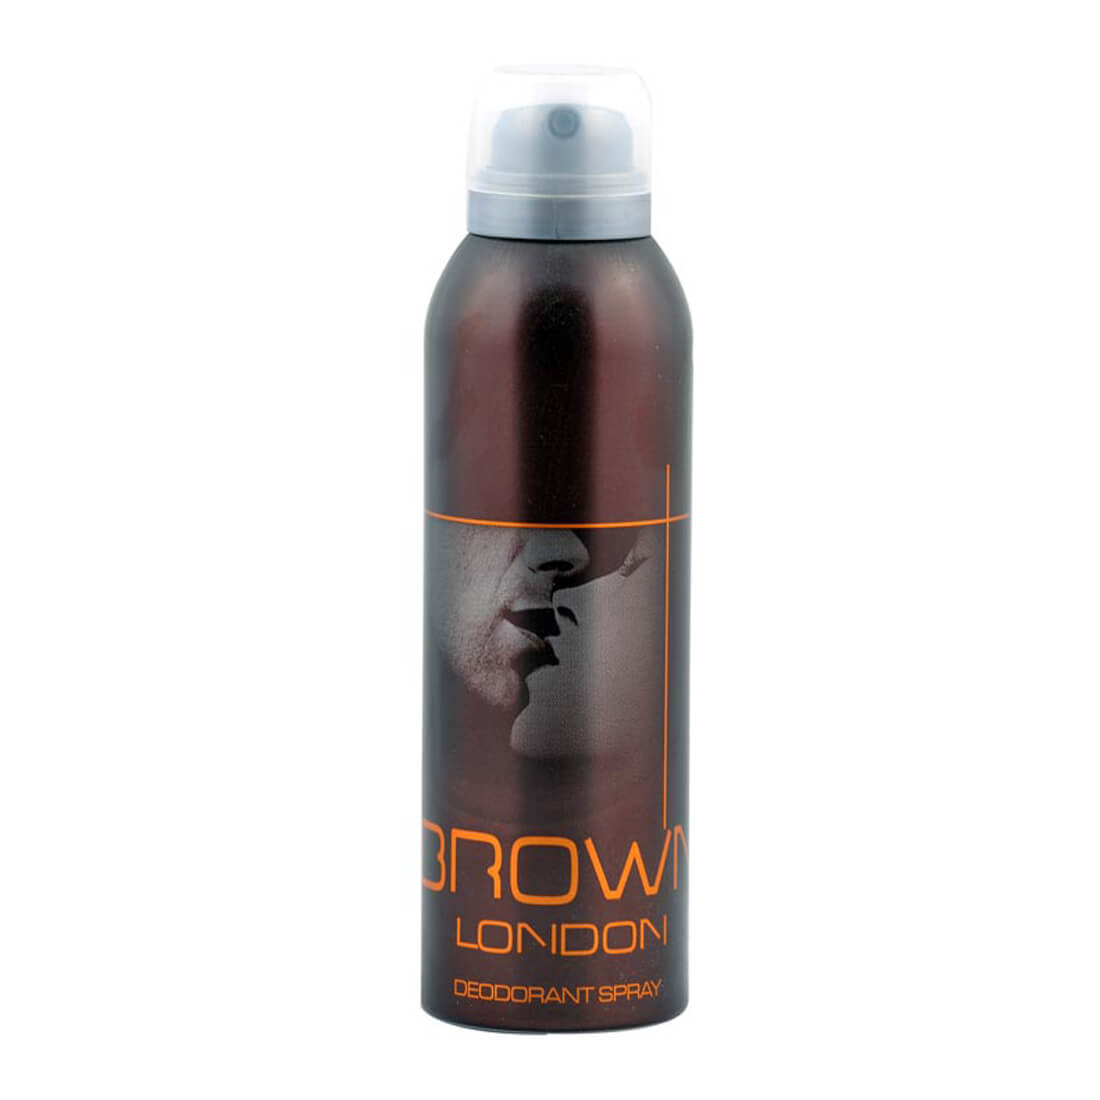 London Brown Deodorant Body Spray Pack of 2 x 200ml